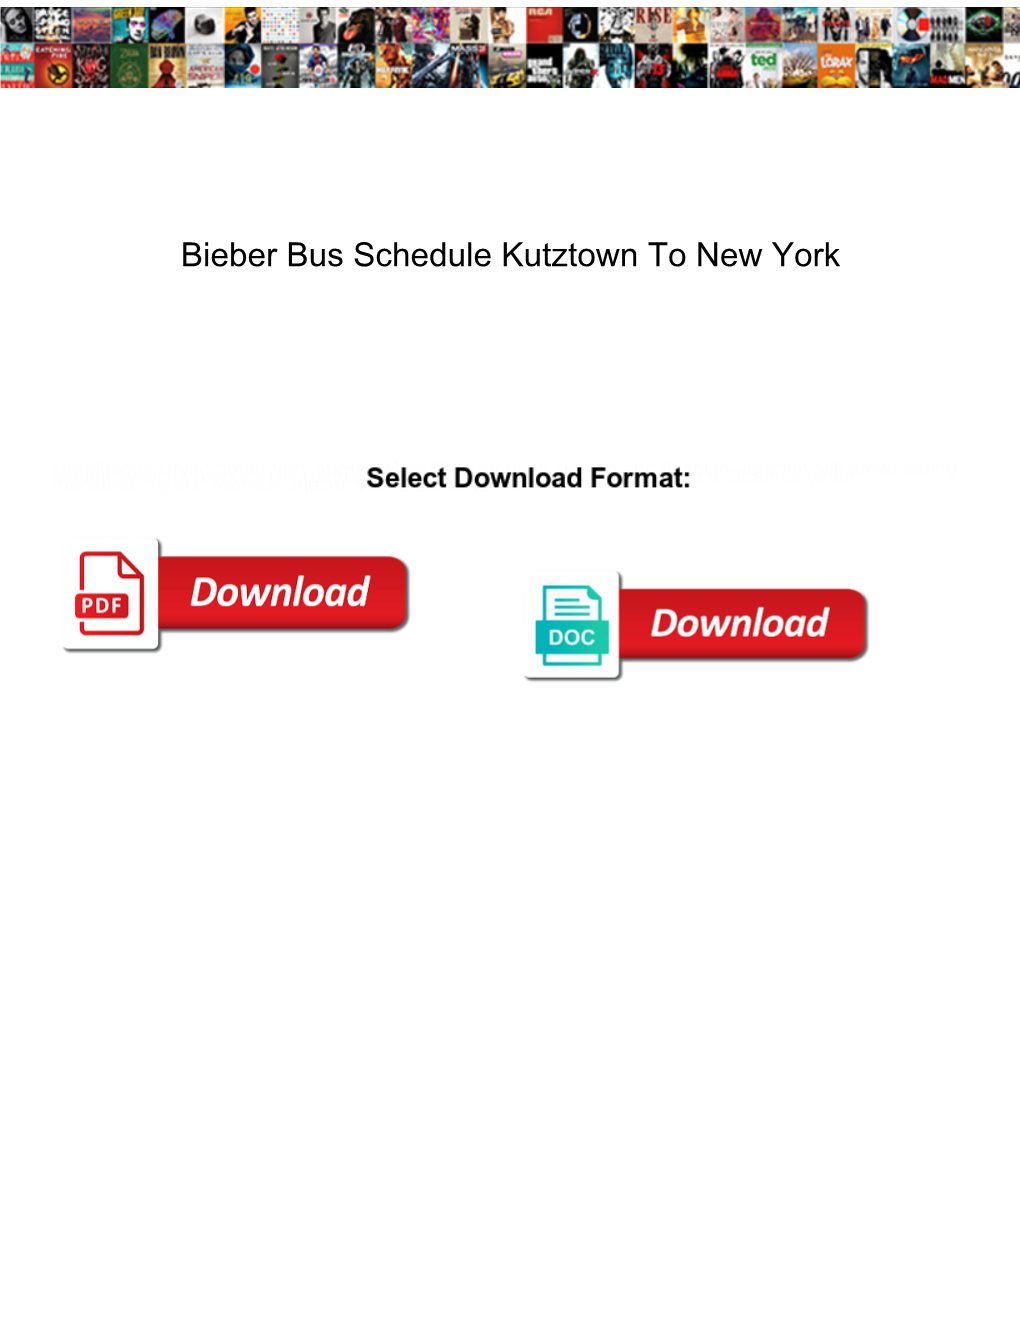 Bieber Bus Schedule Kutztown to New York